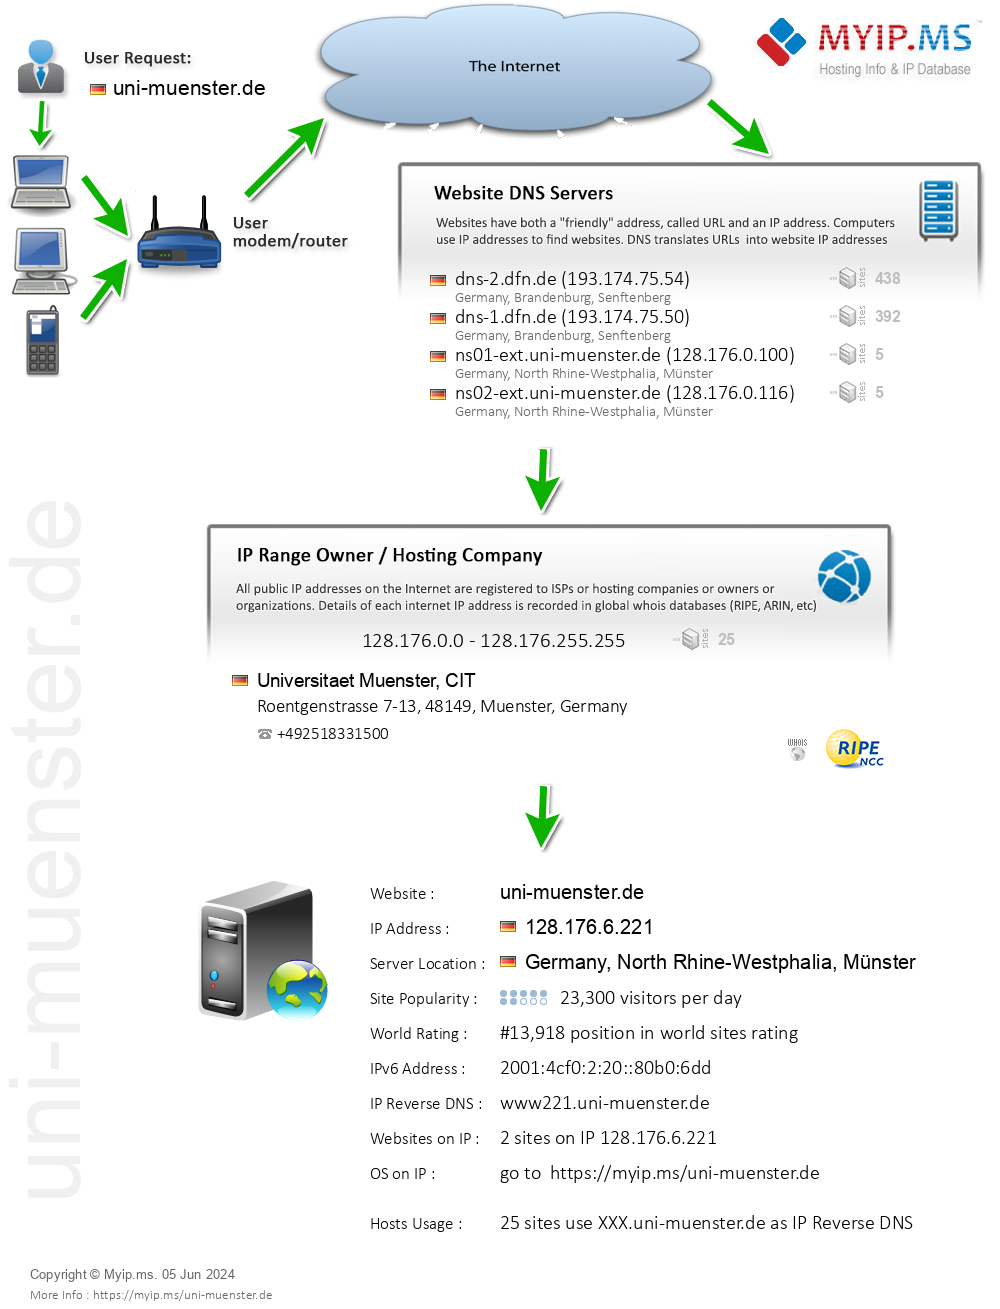 Uni-muenster.de - Website Hosting Visual IP Diagram